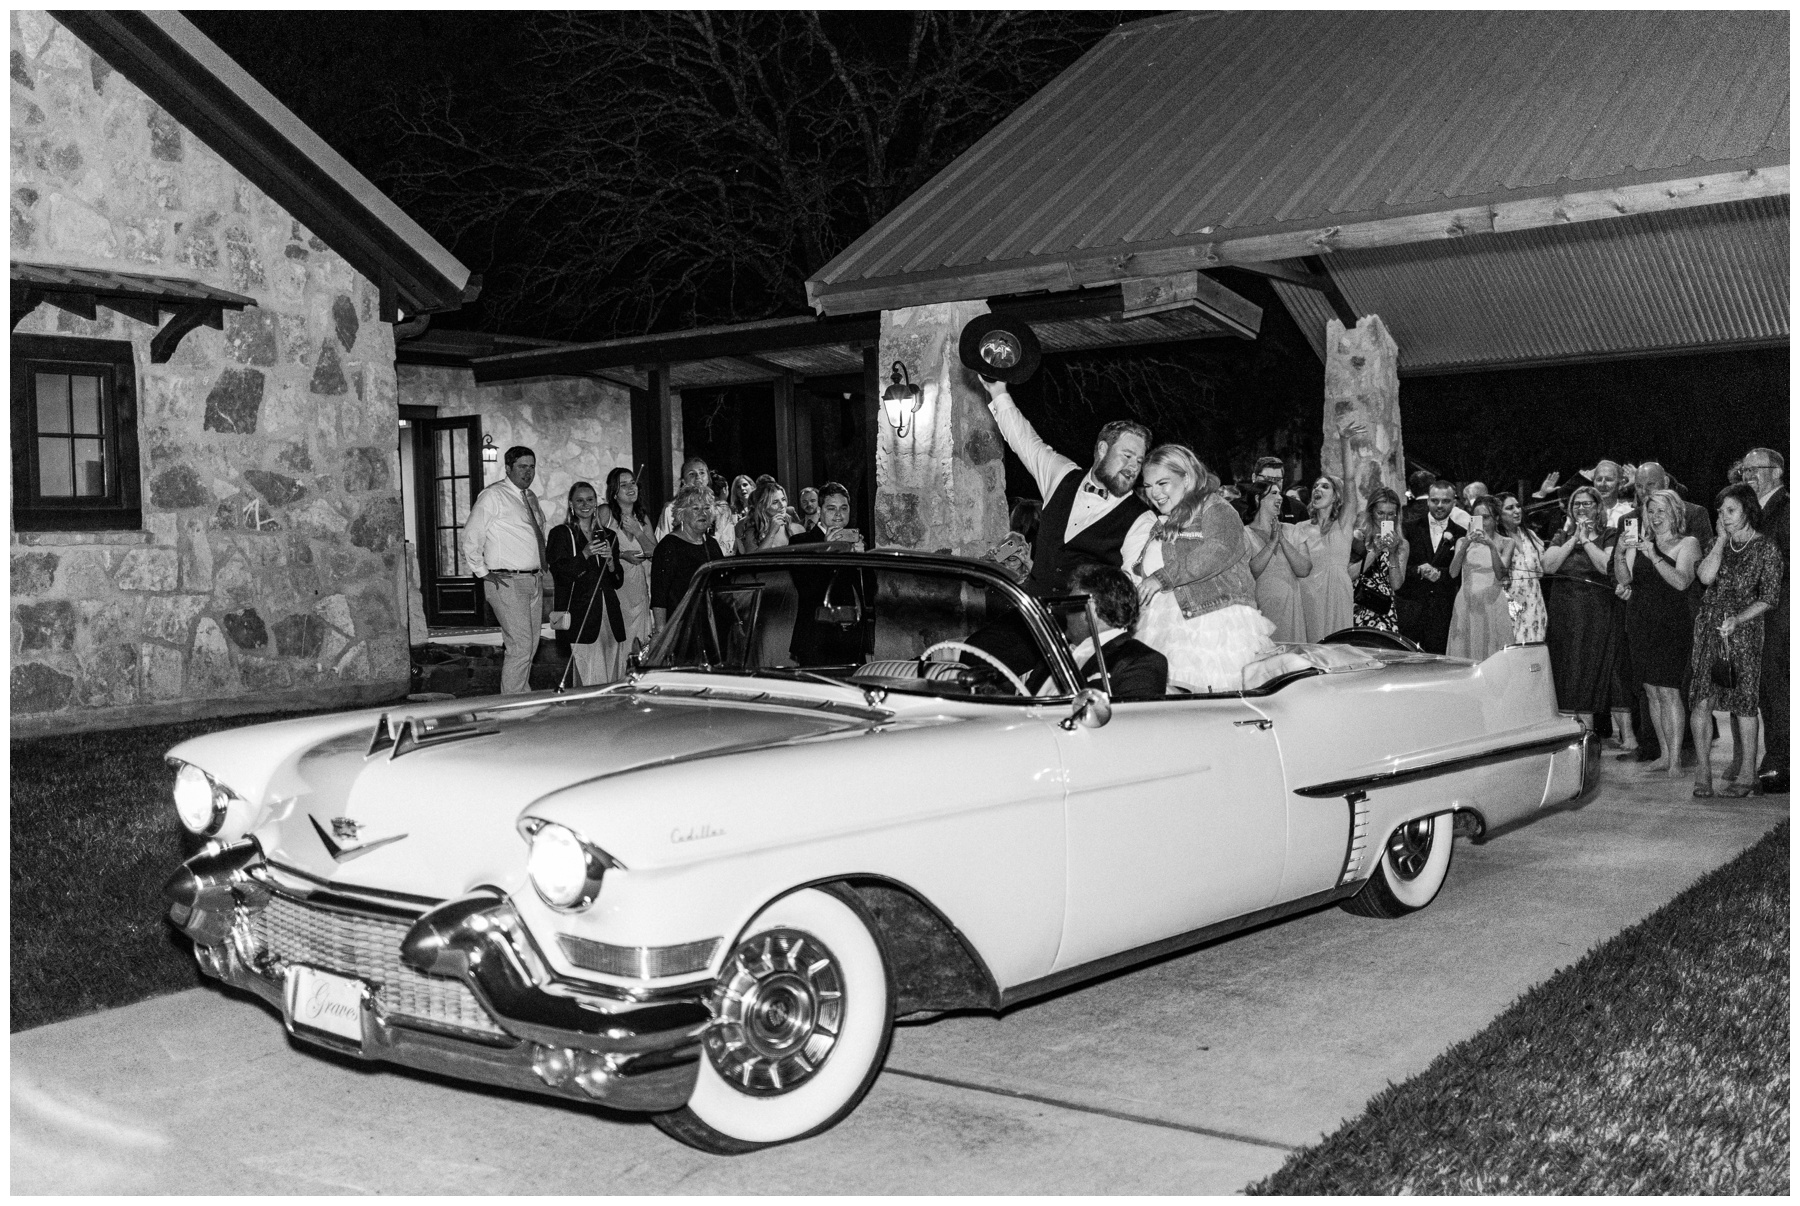 Bride and groom in a vintage getaway car